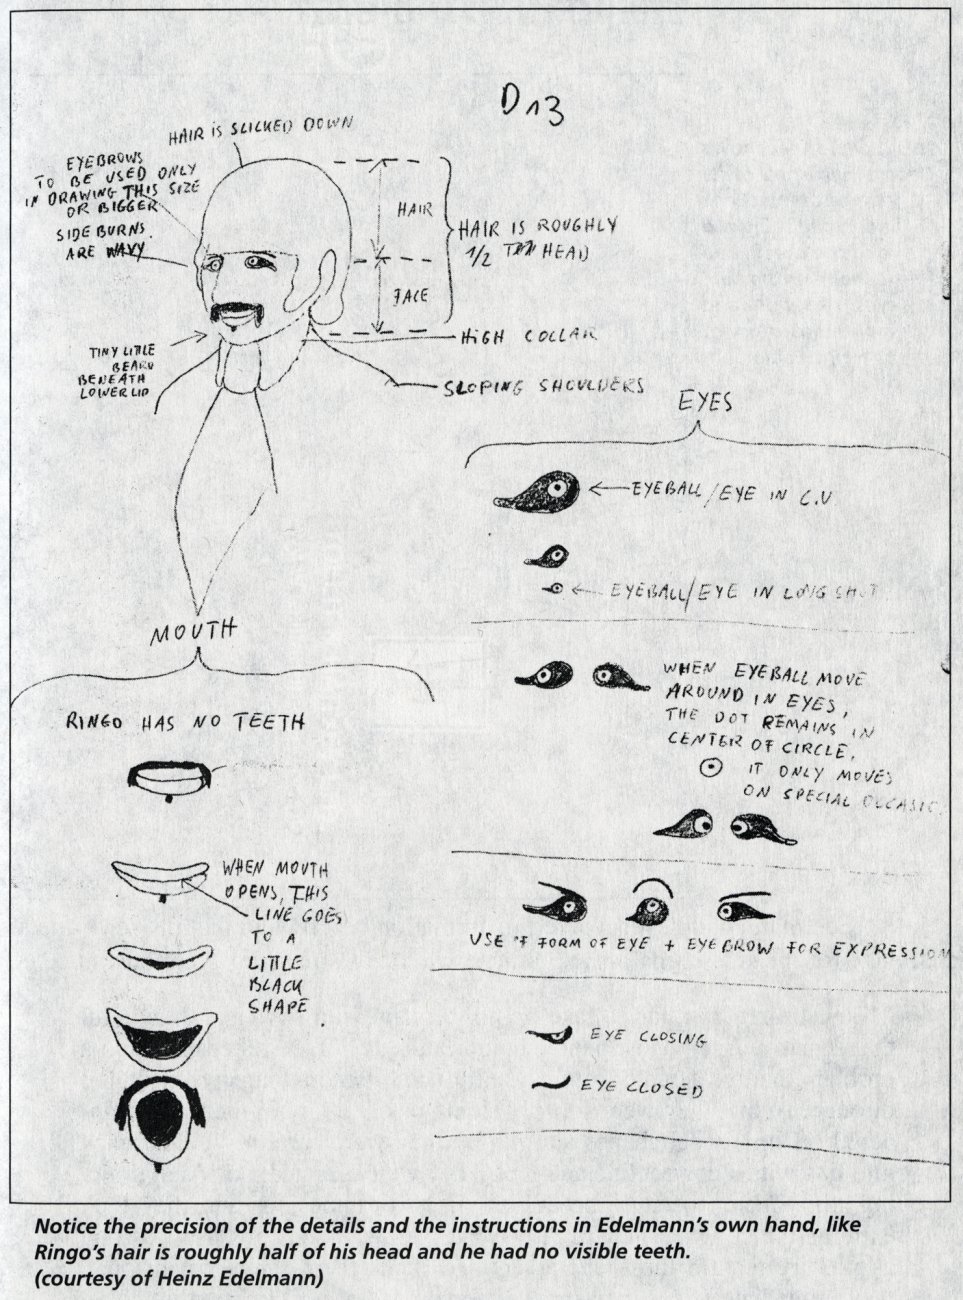 Guide on illustrating Ringo